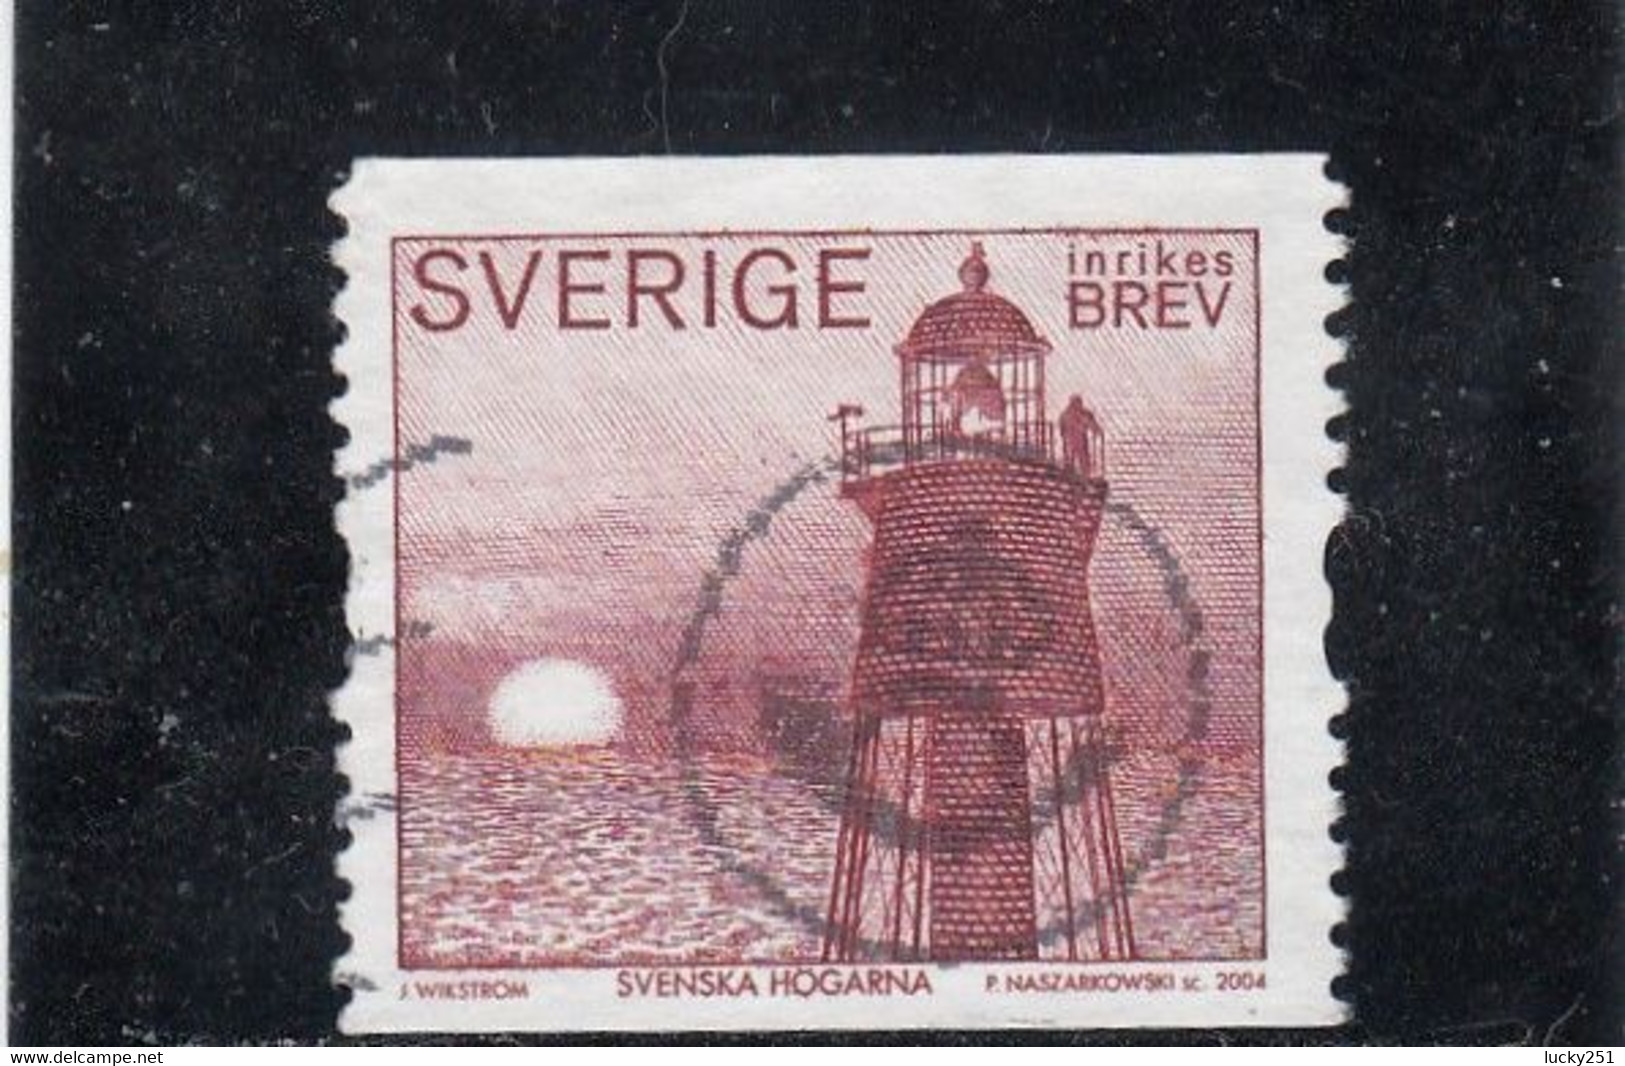 Suède - Oblitérés - Phares, Lighthouse, Leuchtturm. - Lighthouses